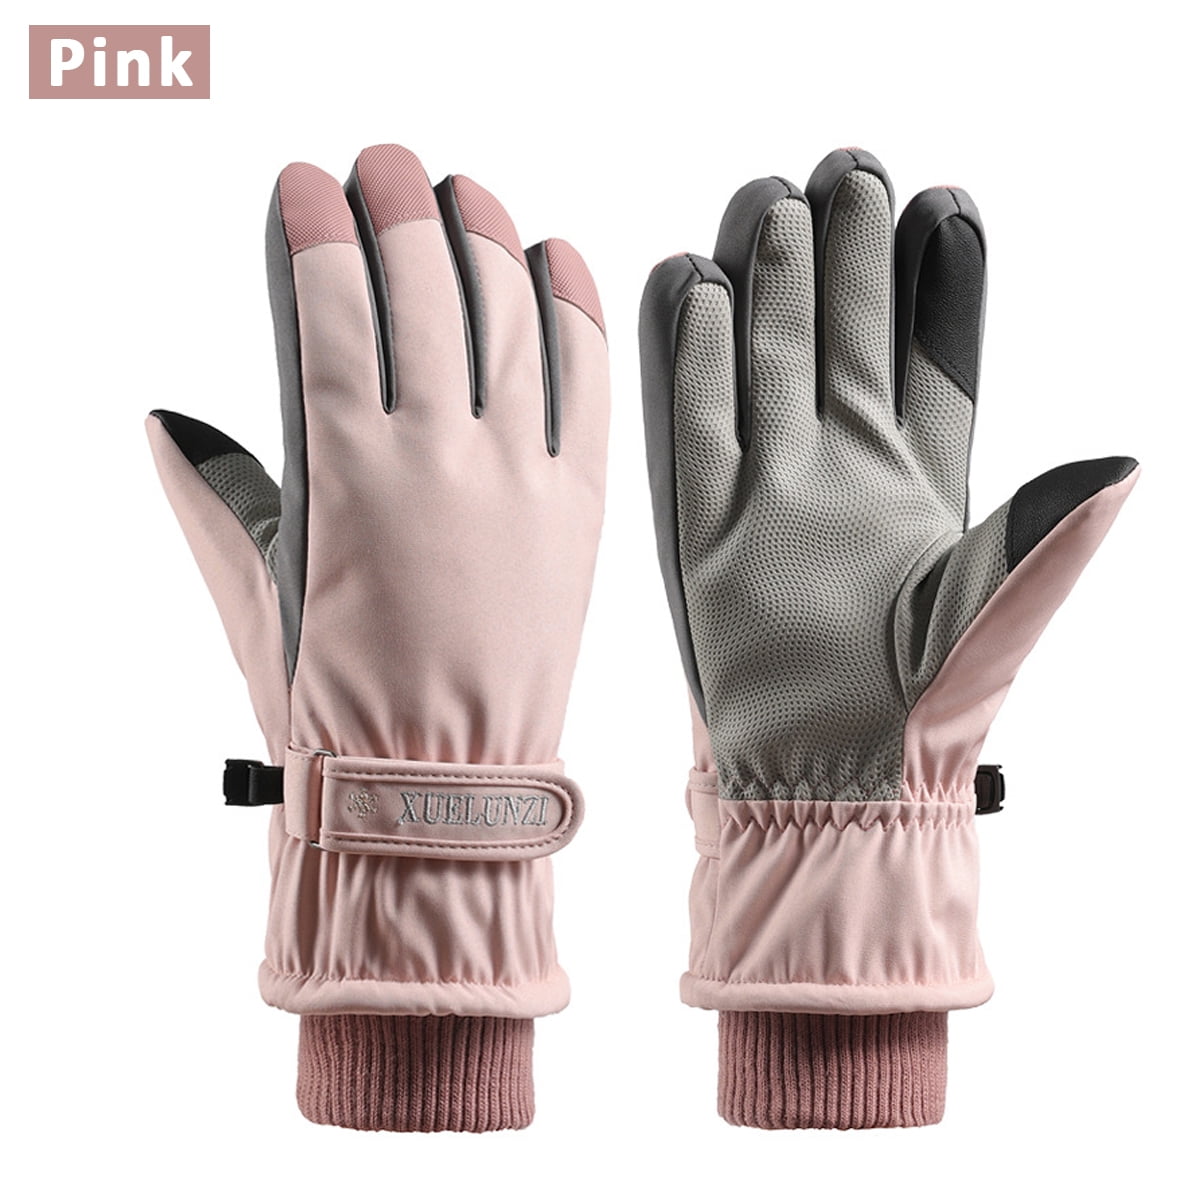 Details about  / Bike Ski Gloves Windproof Waterproof Anti-slip Thermal Touch Screen Winter Warm